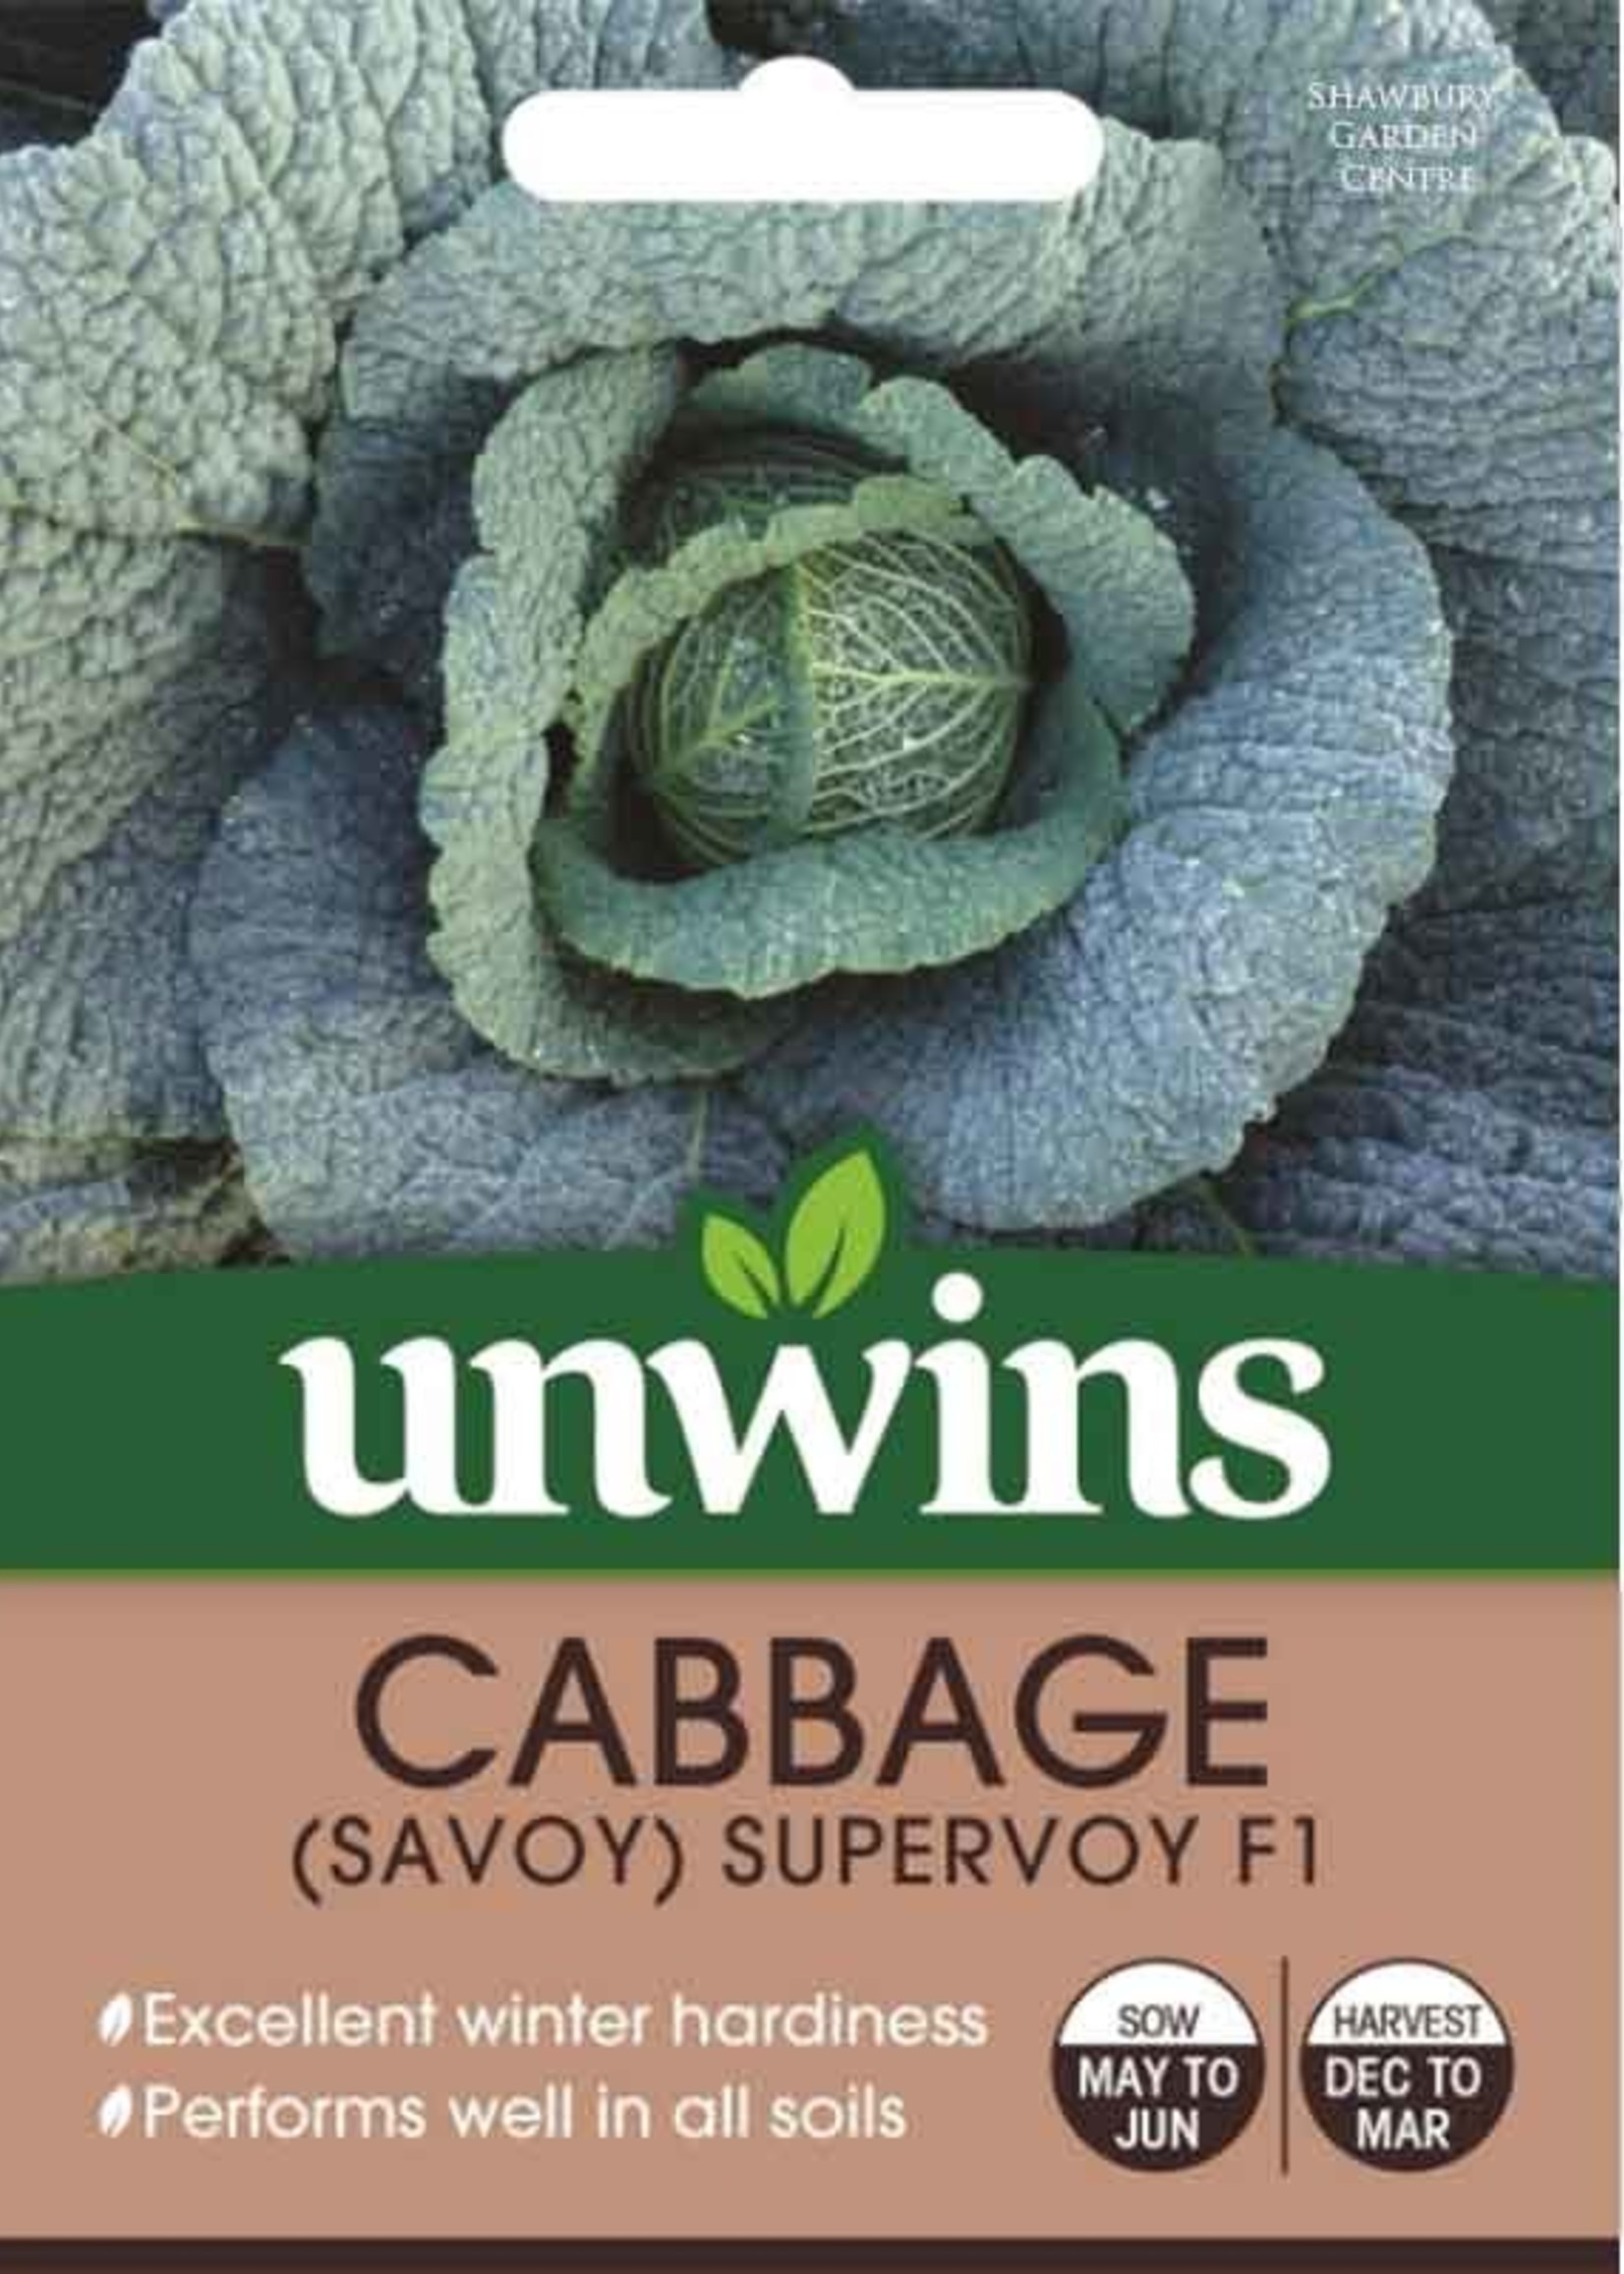 Unwins Cabbage (Savoy) Supervoy F1